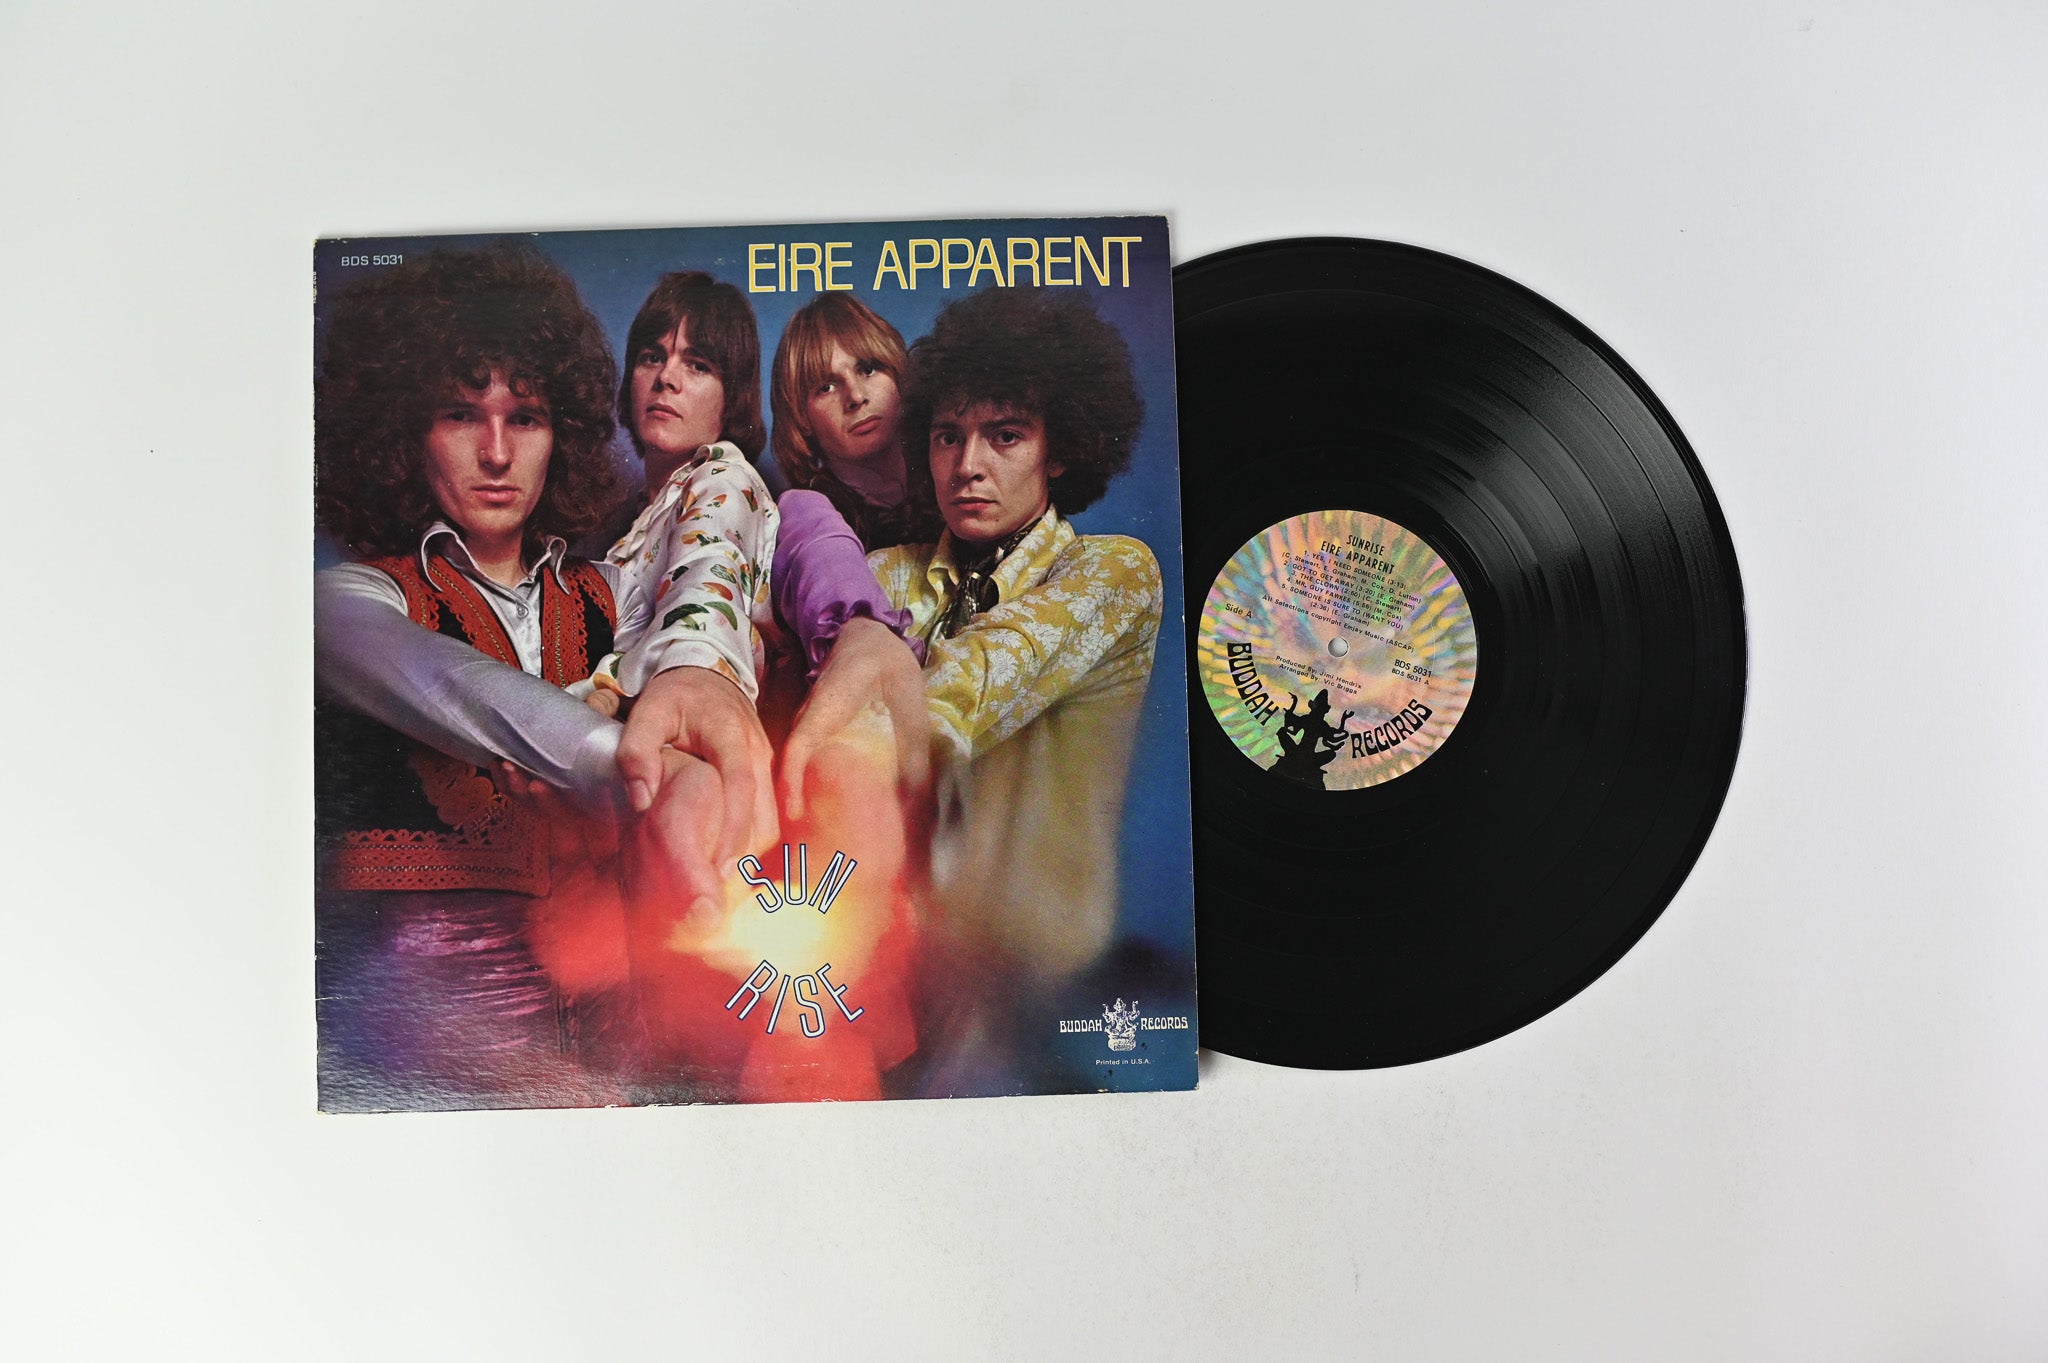 Eire Apparent - Sunrise on Buddah Records